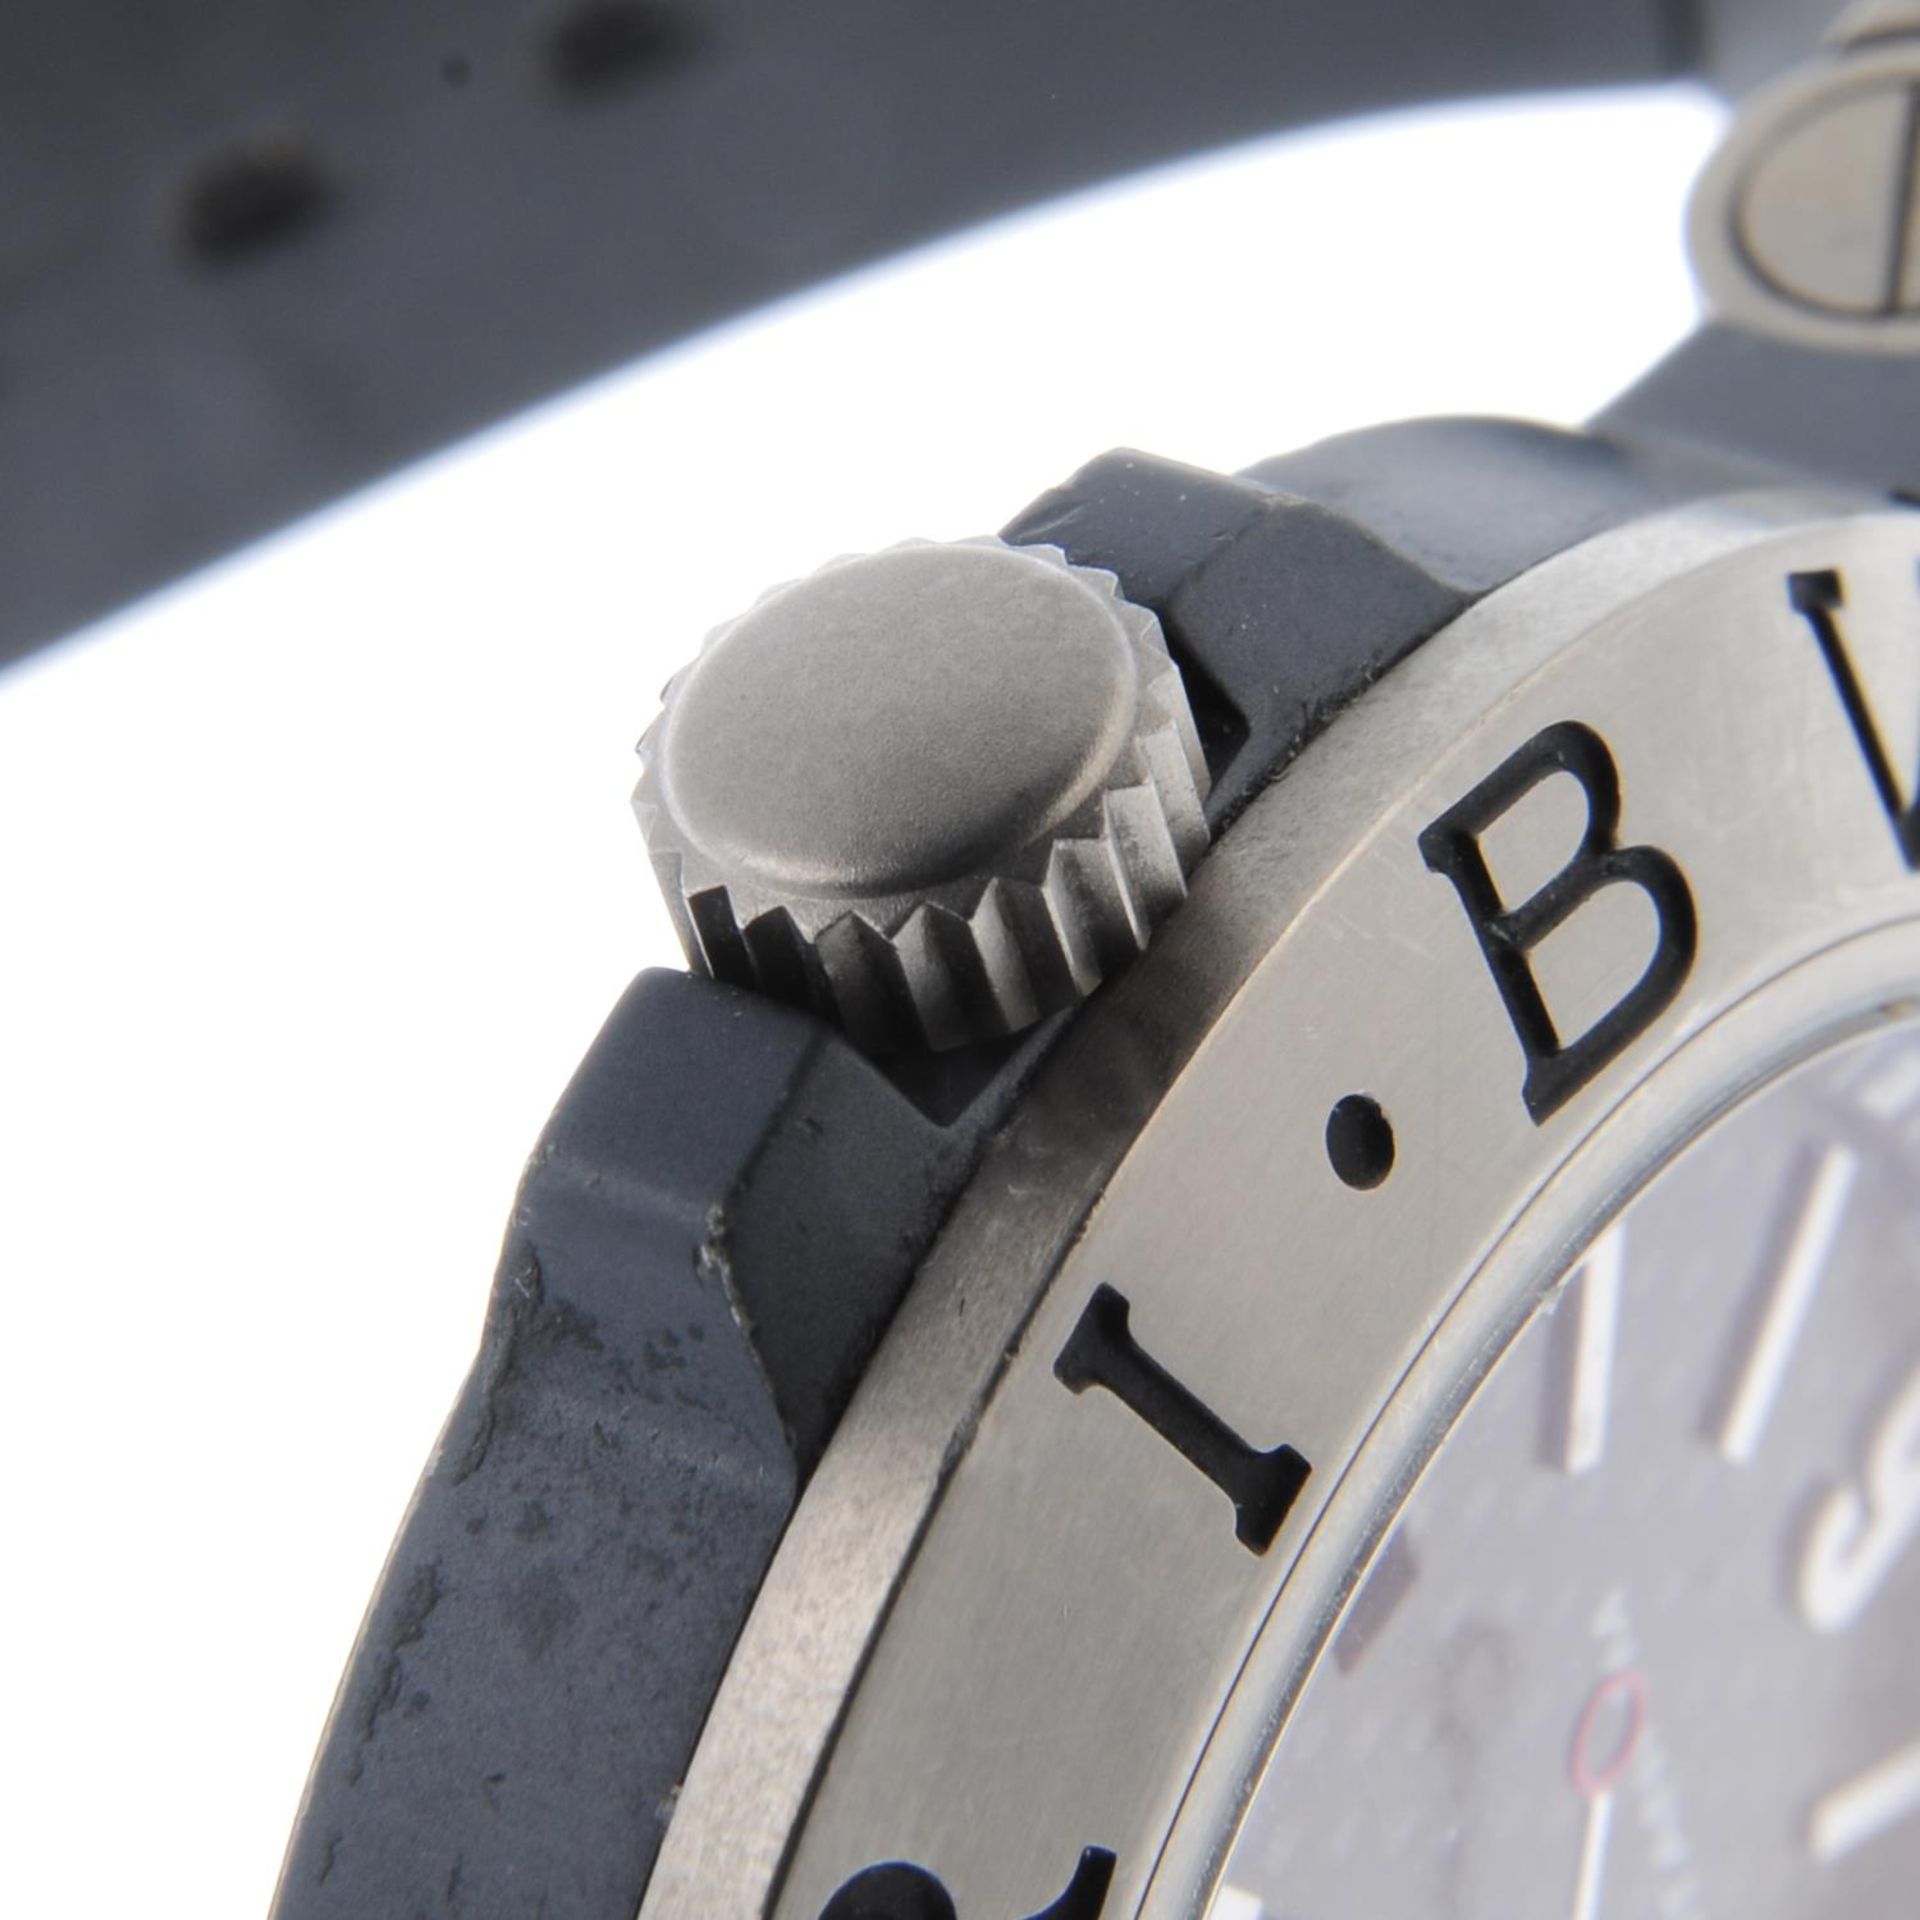 BULGARI - a gentleman's Diagono wrist watch. - Image 4 of 4